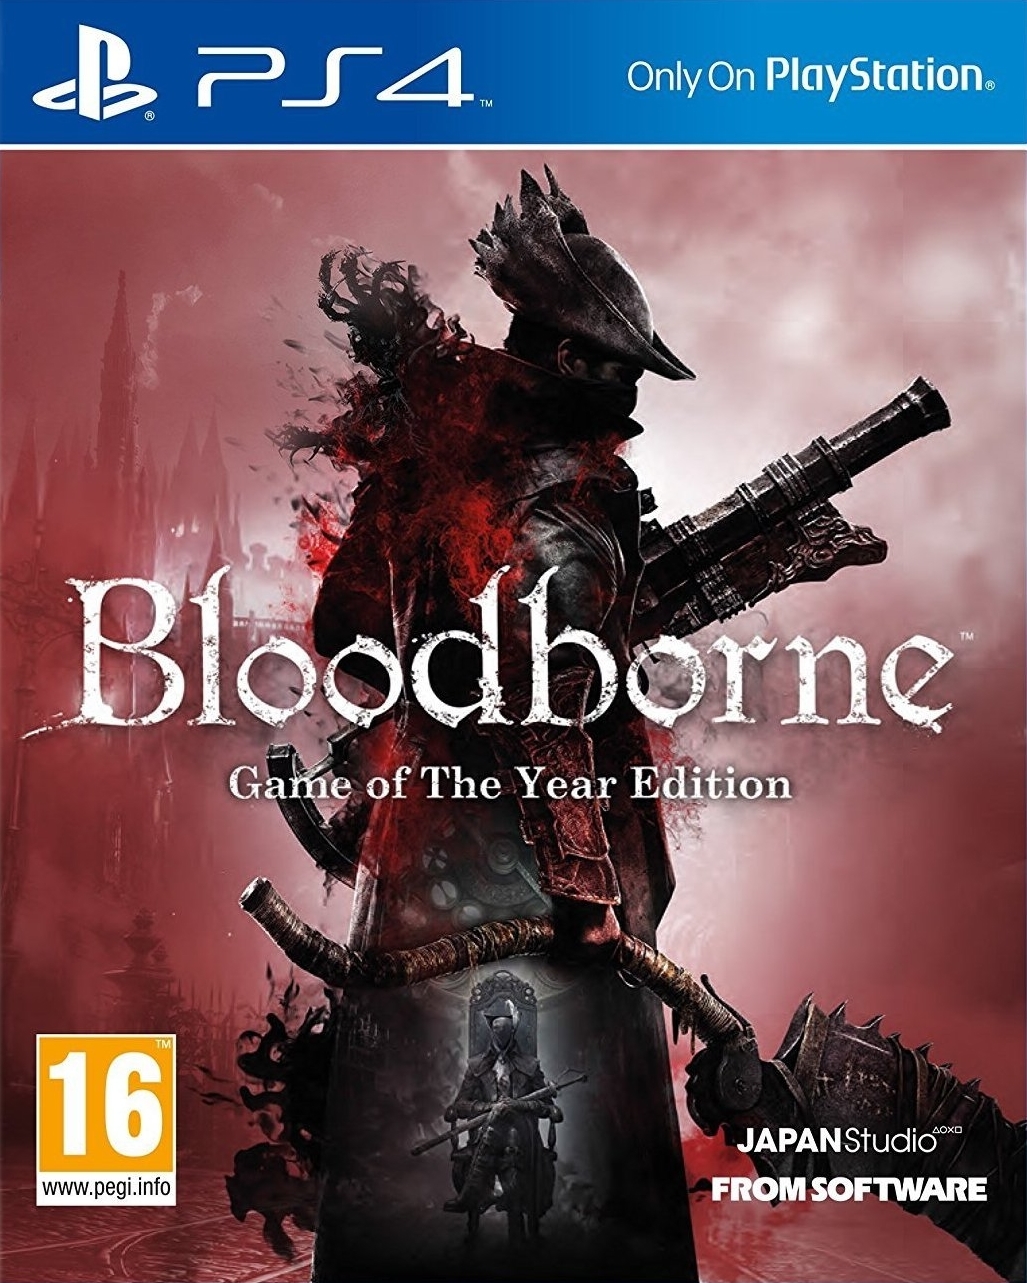 Bloodborne - Wikipedia